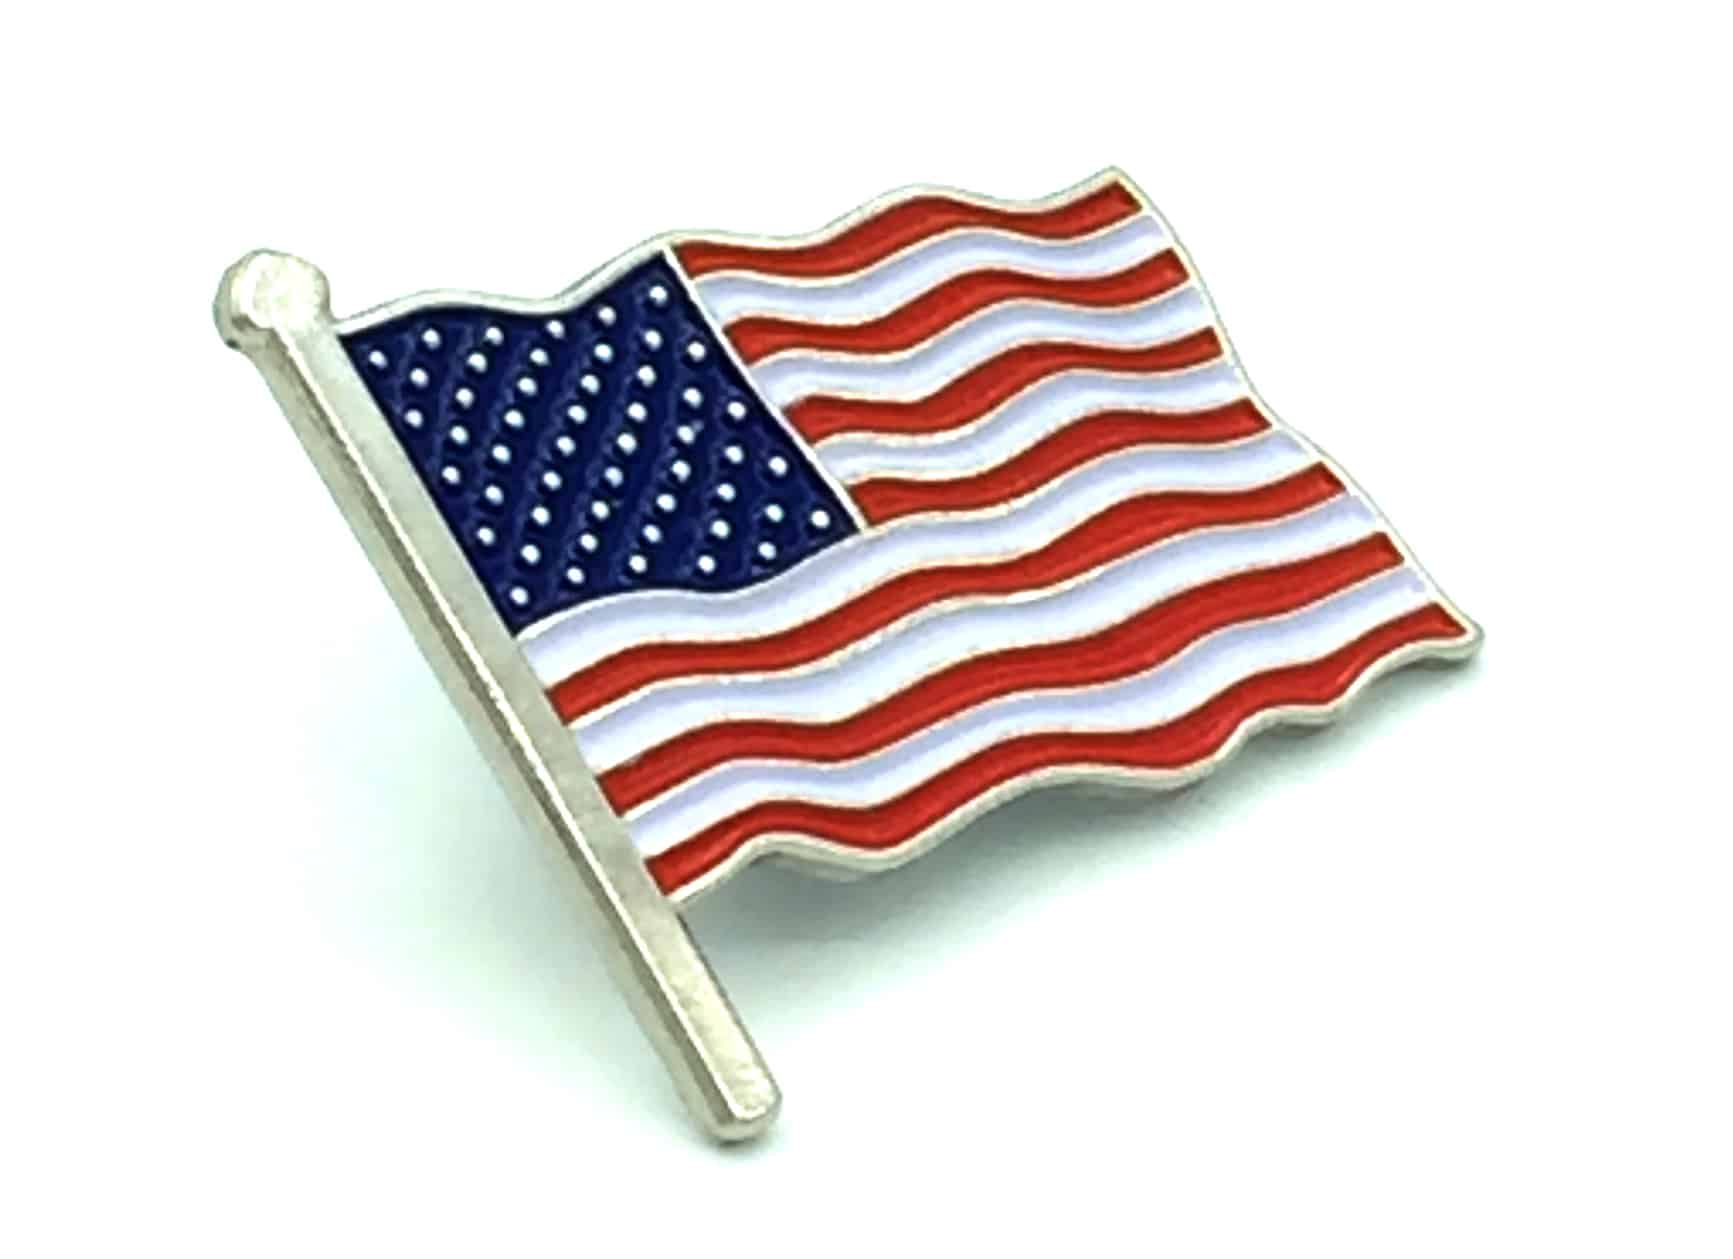 Lot of 3 Pins*American Flag waving"Gold tone <3/4 inch> Hat Pin /Lapel Pins 